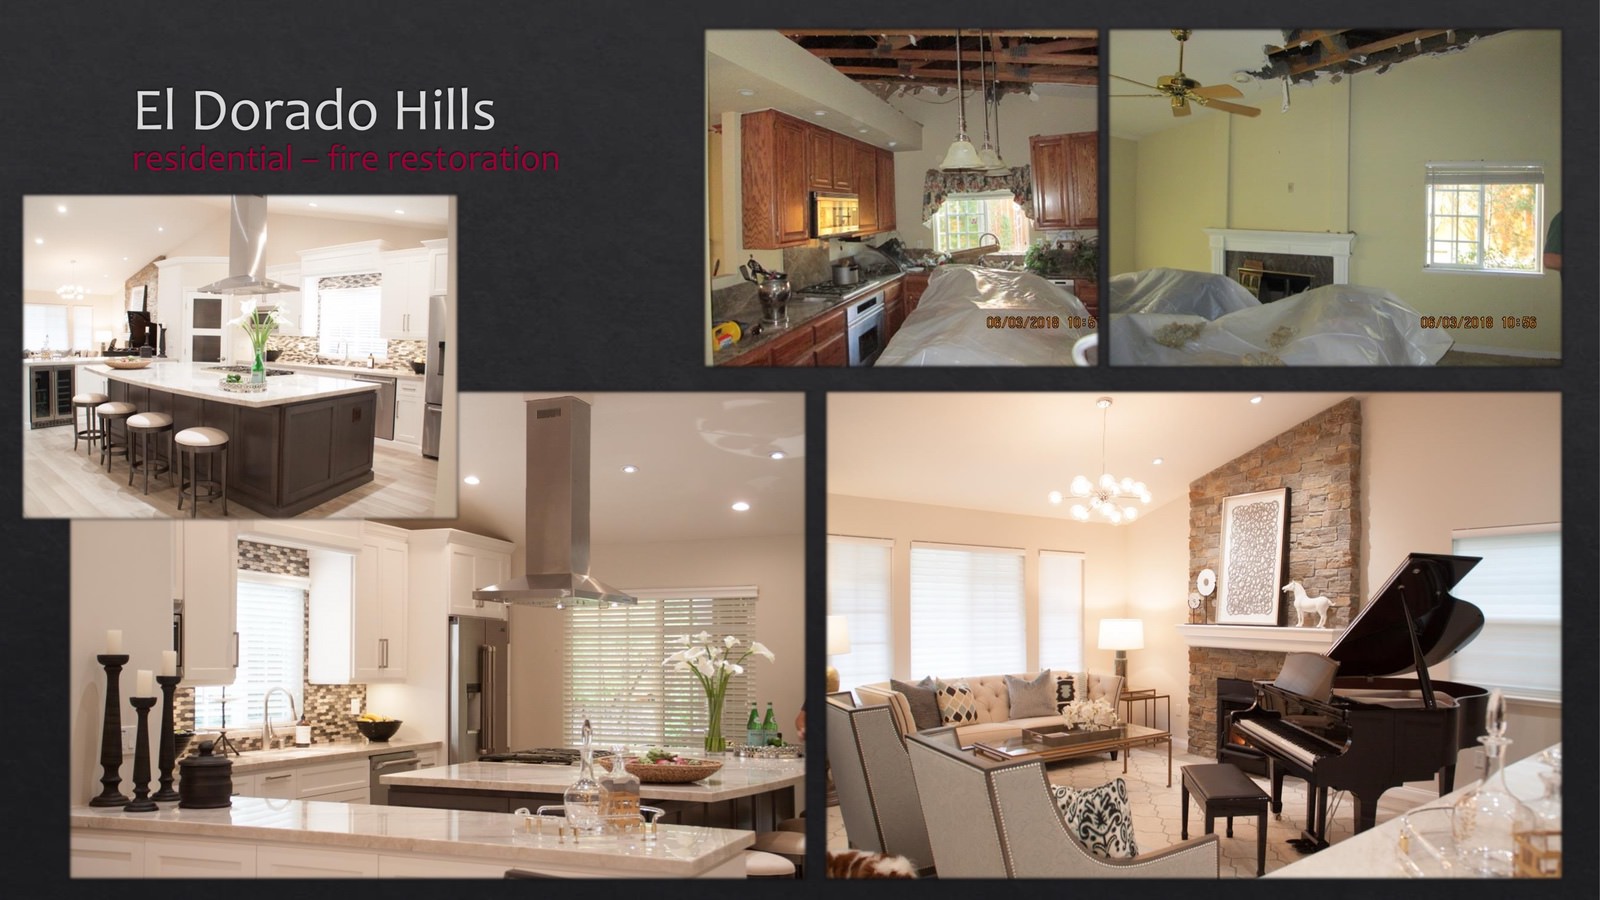 El Dorado Hills Residential fire restoration - living room and kitchen